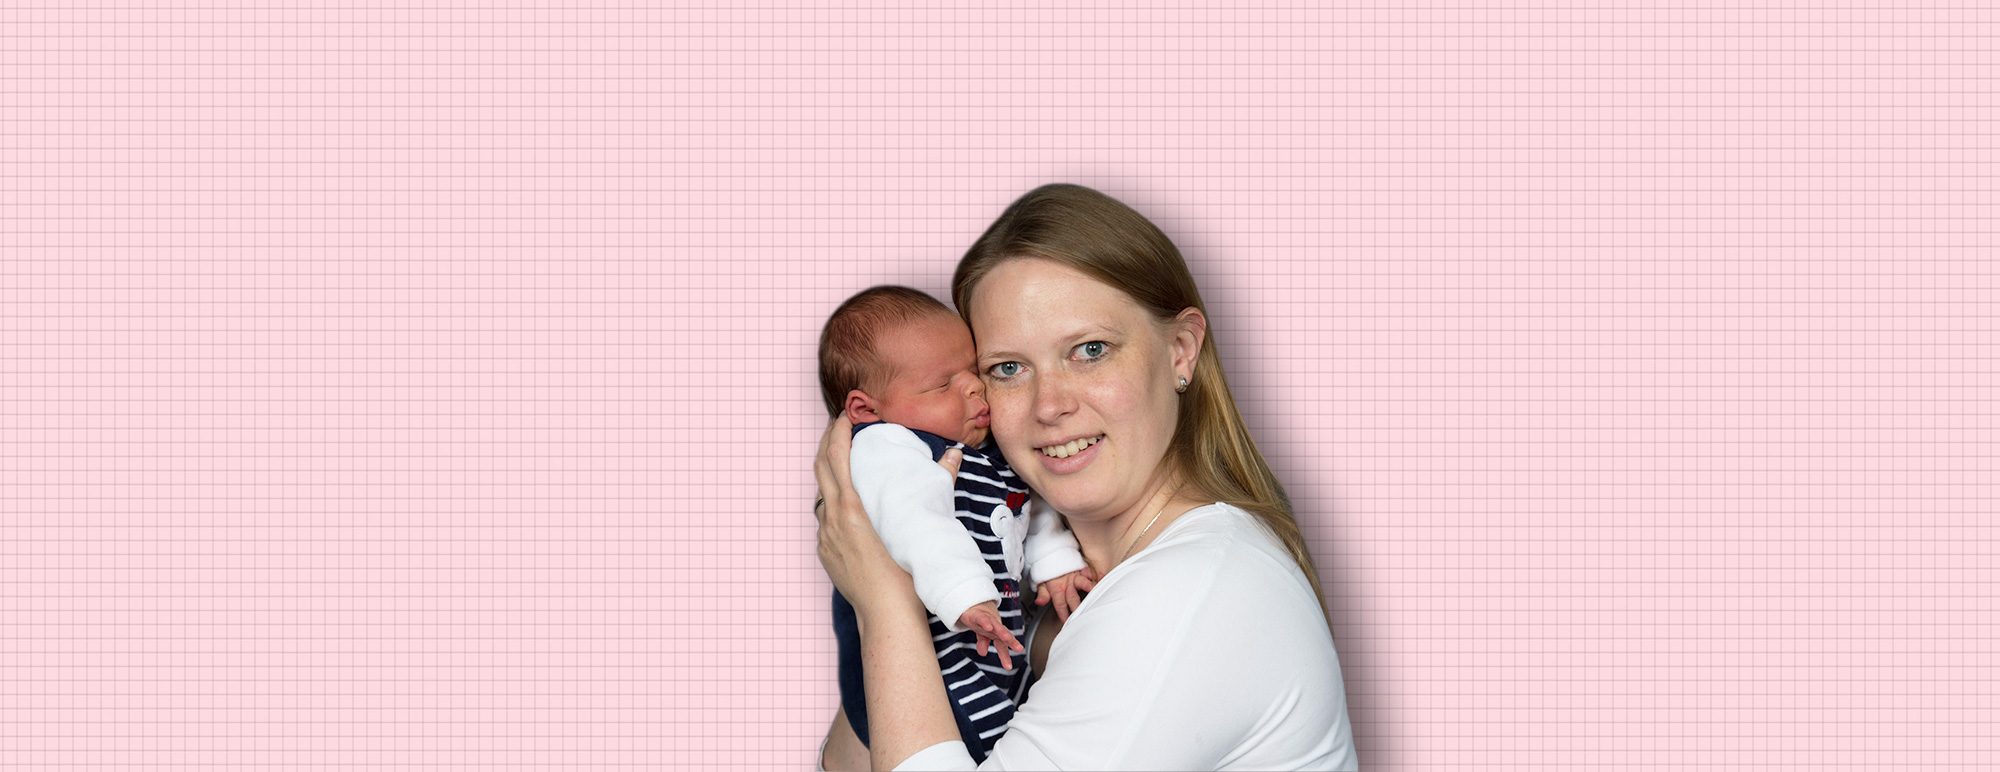 Babymassage-Kurse in Zug | Rabea Polli, Kinderkrankenschwester